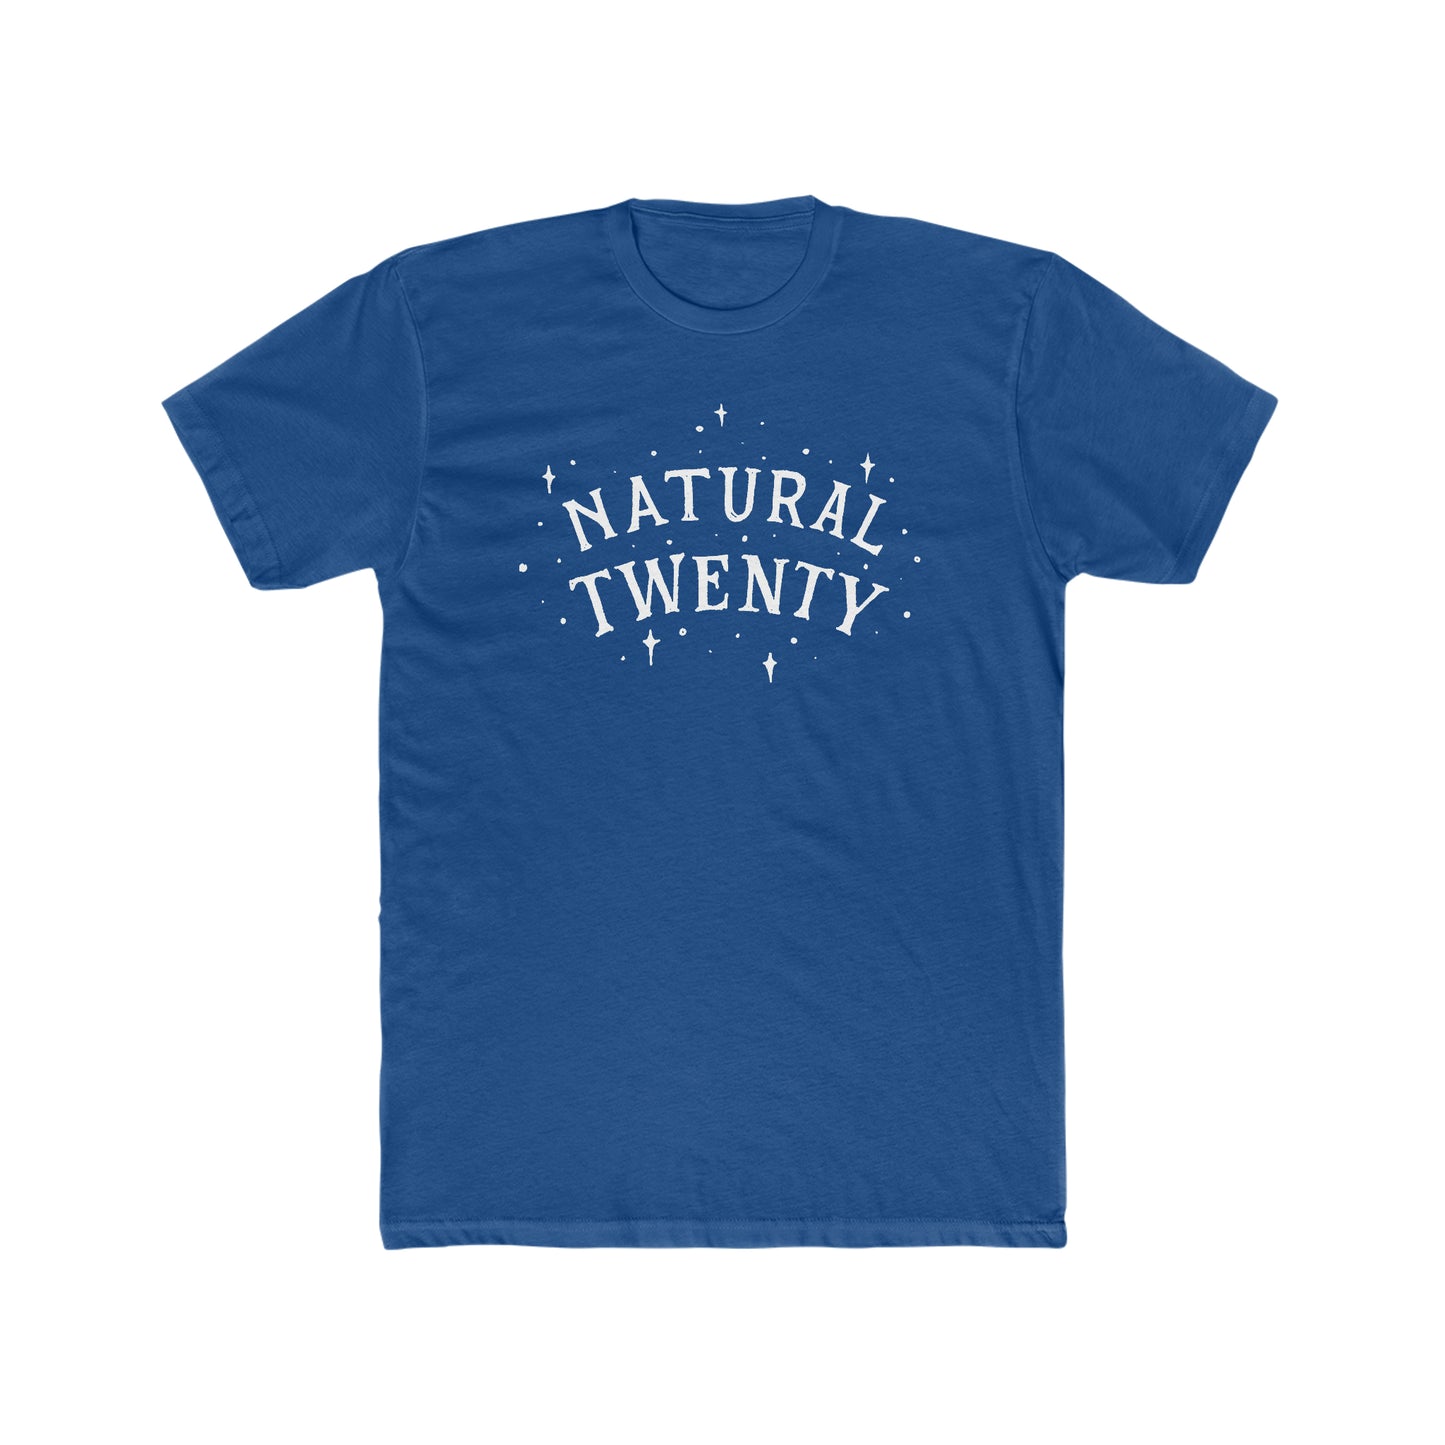 Natural Twenty — Tabletop Type Tee